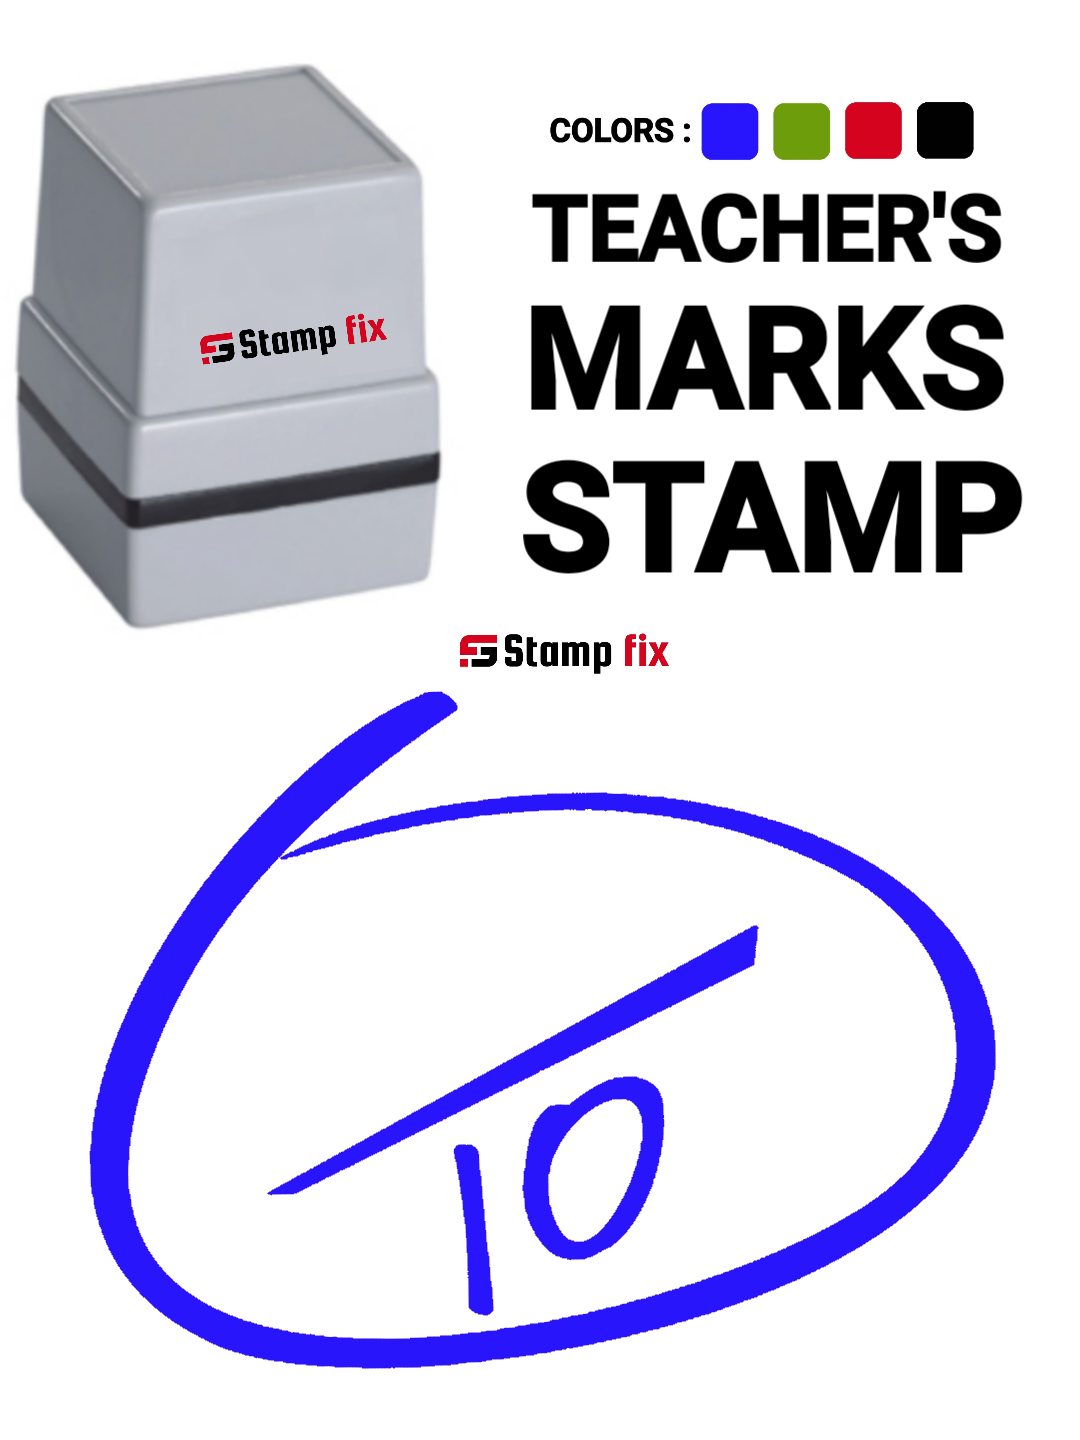 Teachers Marks stamp, Self ink stamp, pre ink stamp, sun stamp, rubber stamp, nylon stamp, polymer stamp